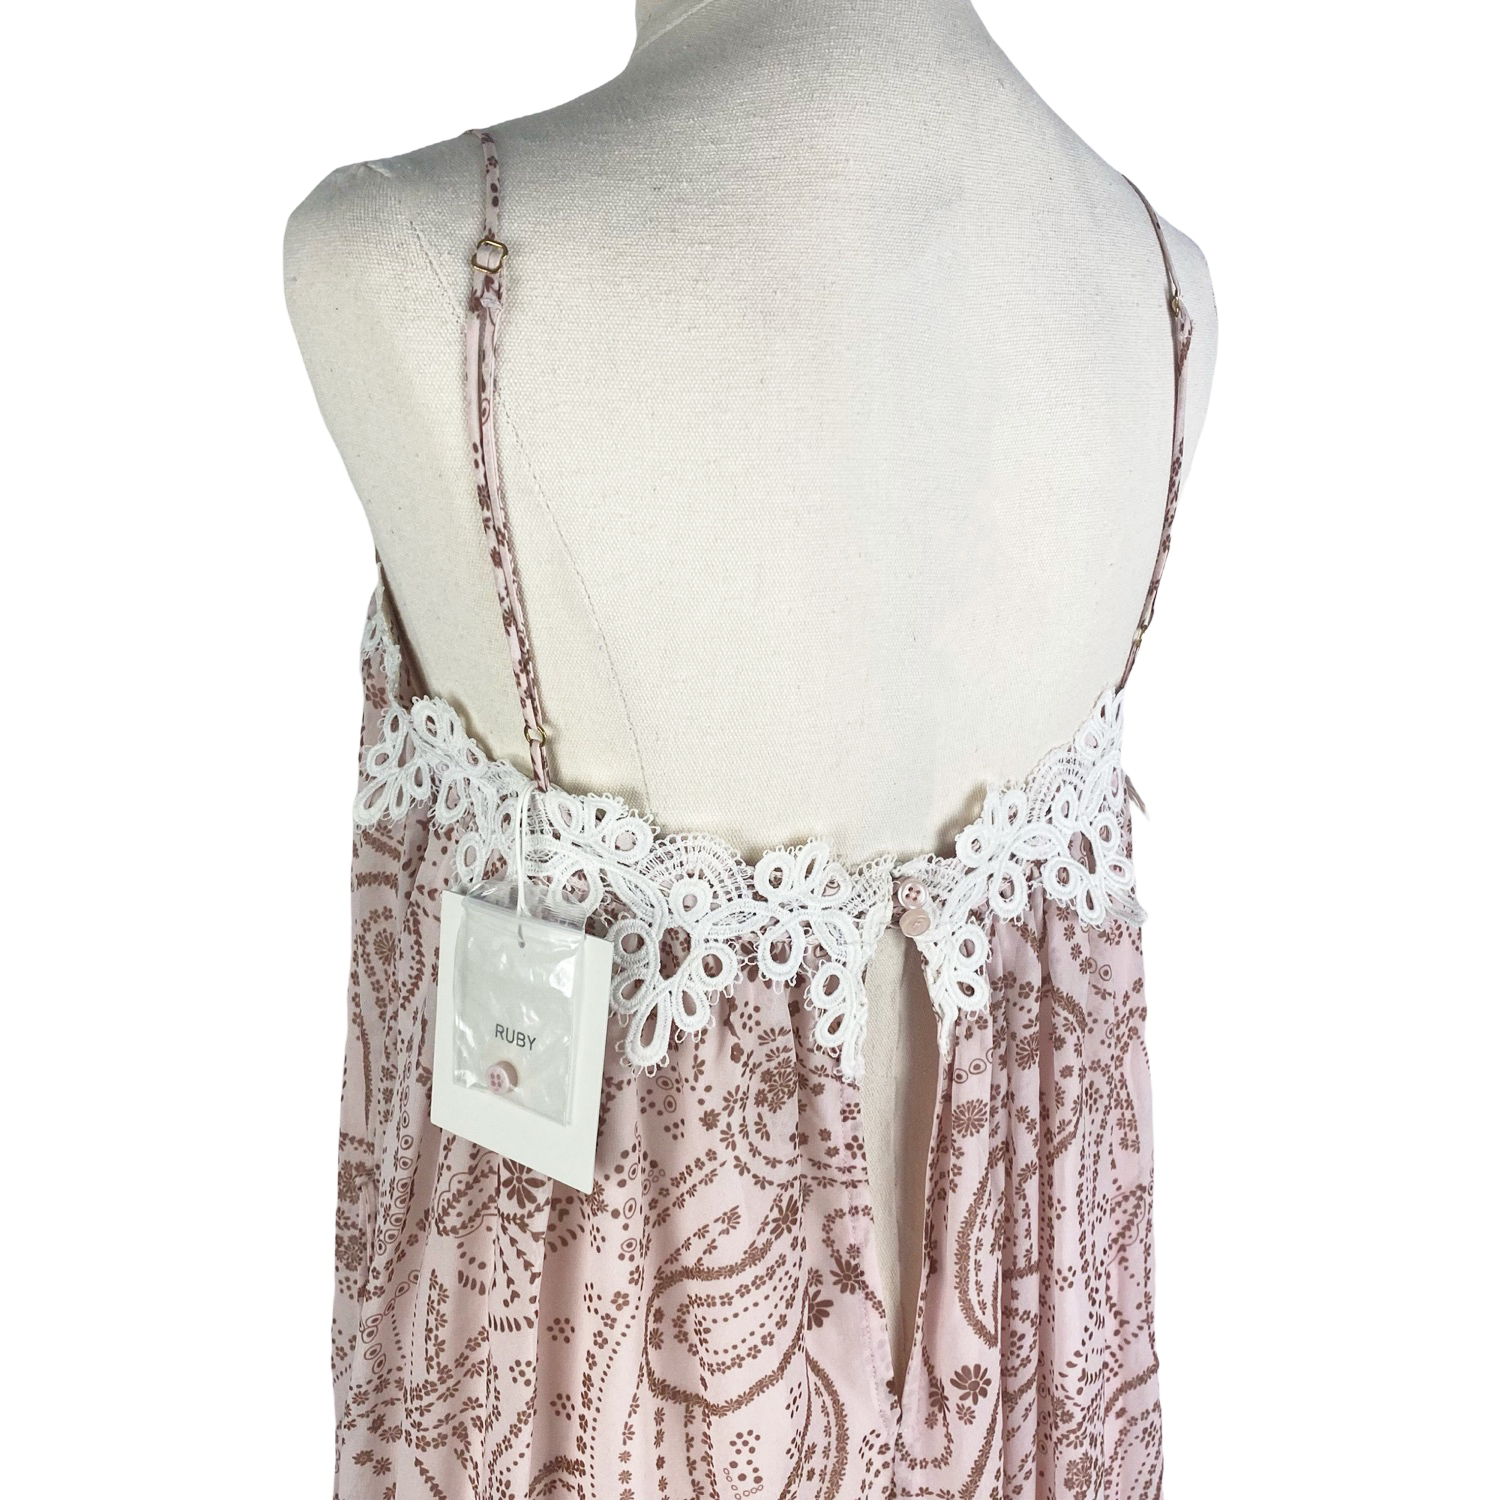 Ruby pink ceramic midi dress - new with tag | size 6-8